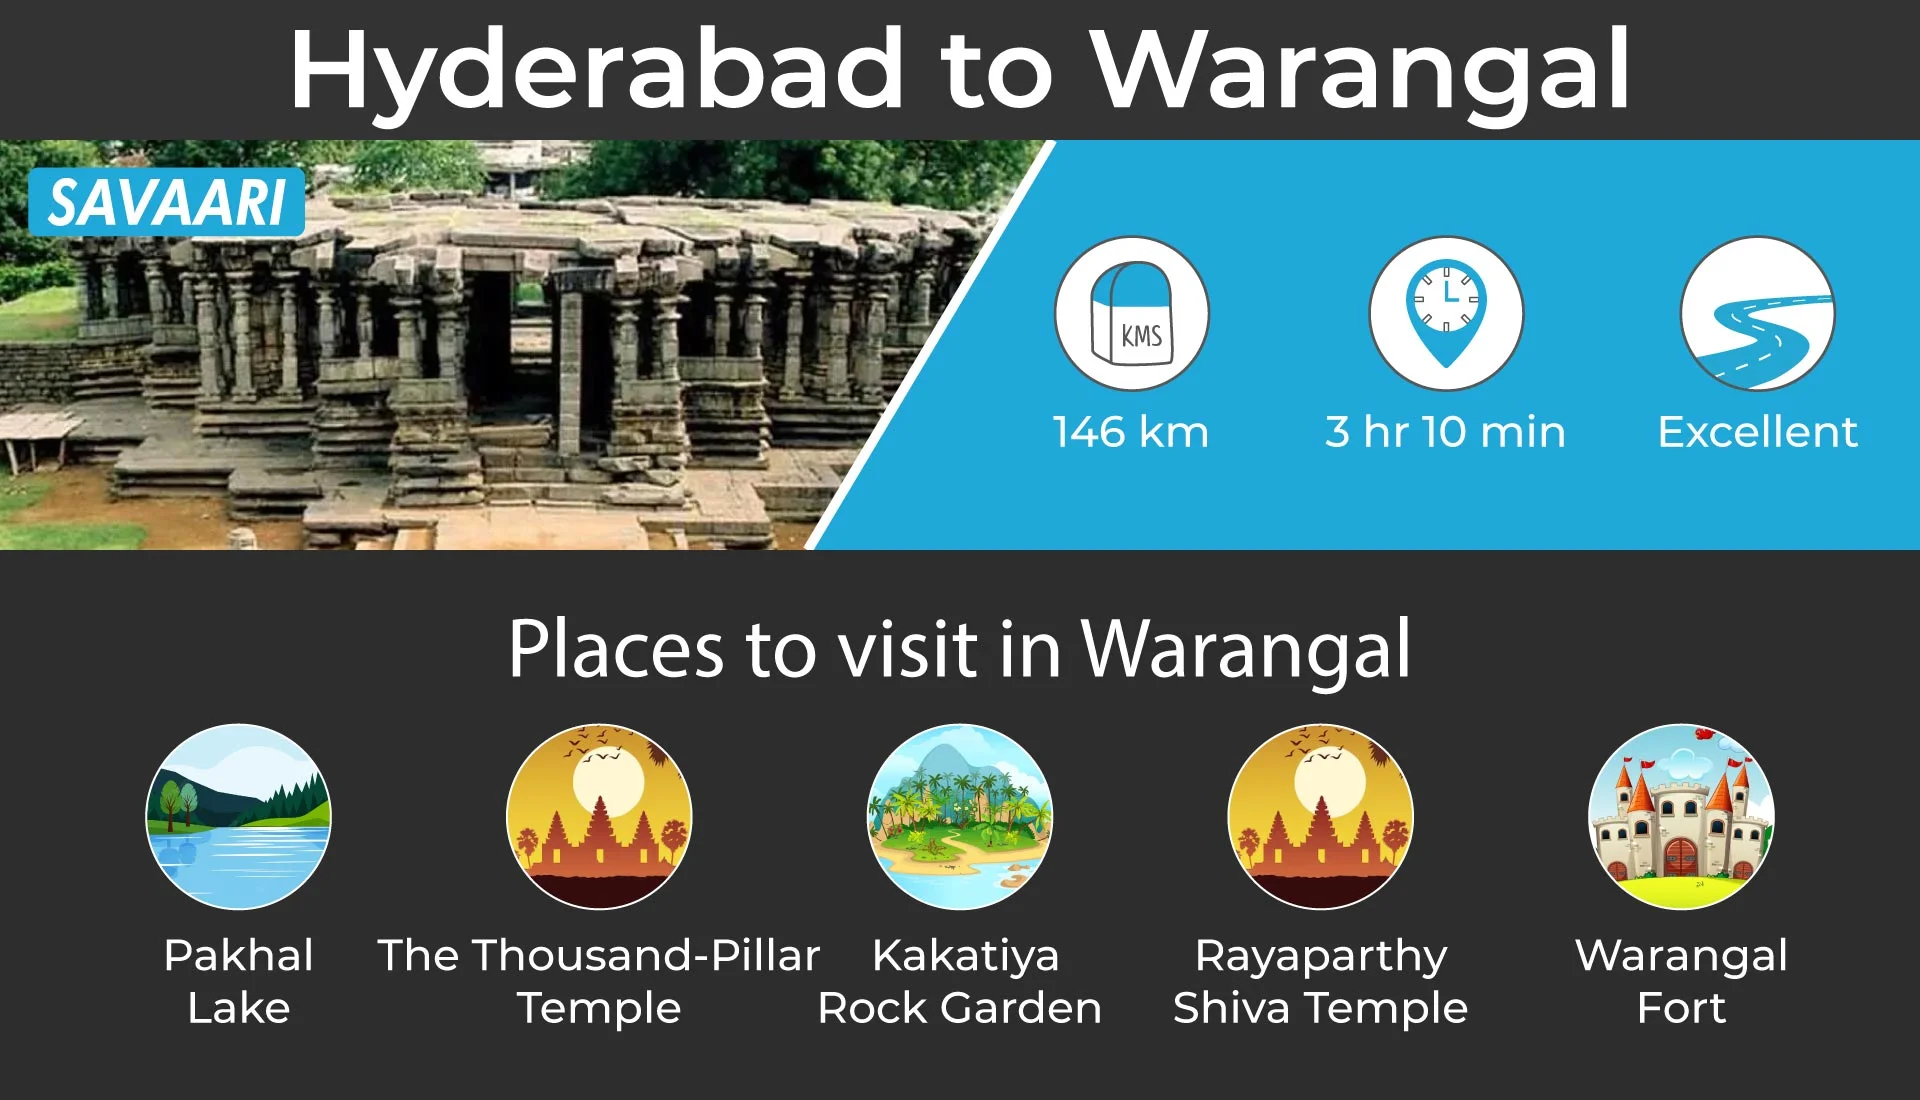 Heritage place near Hyderabad - Warangal